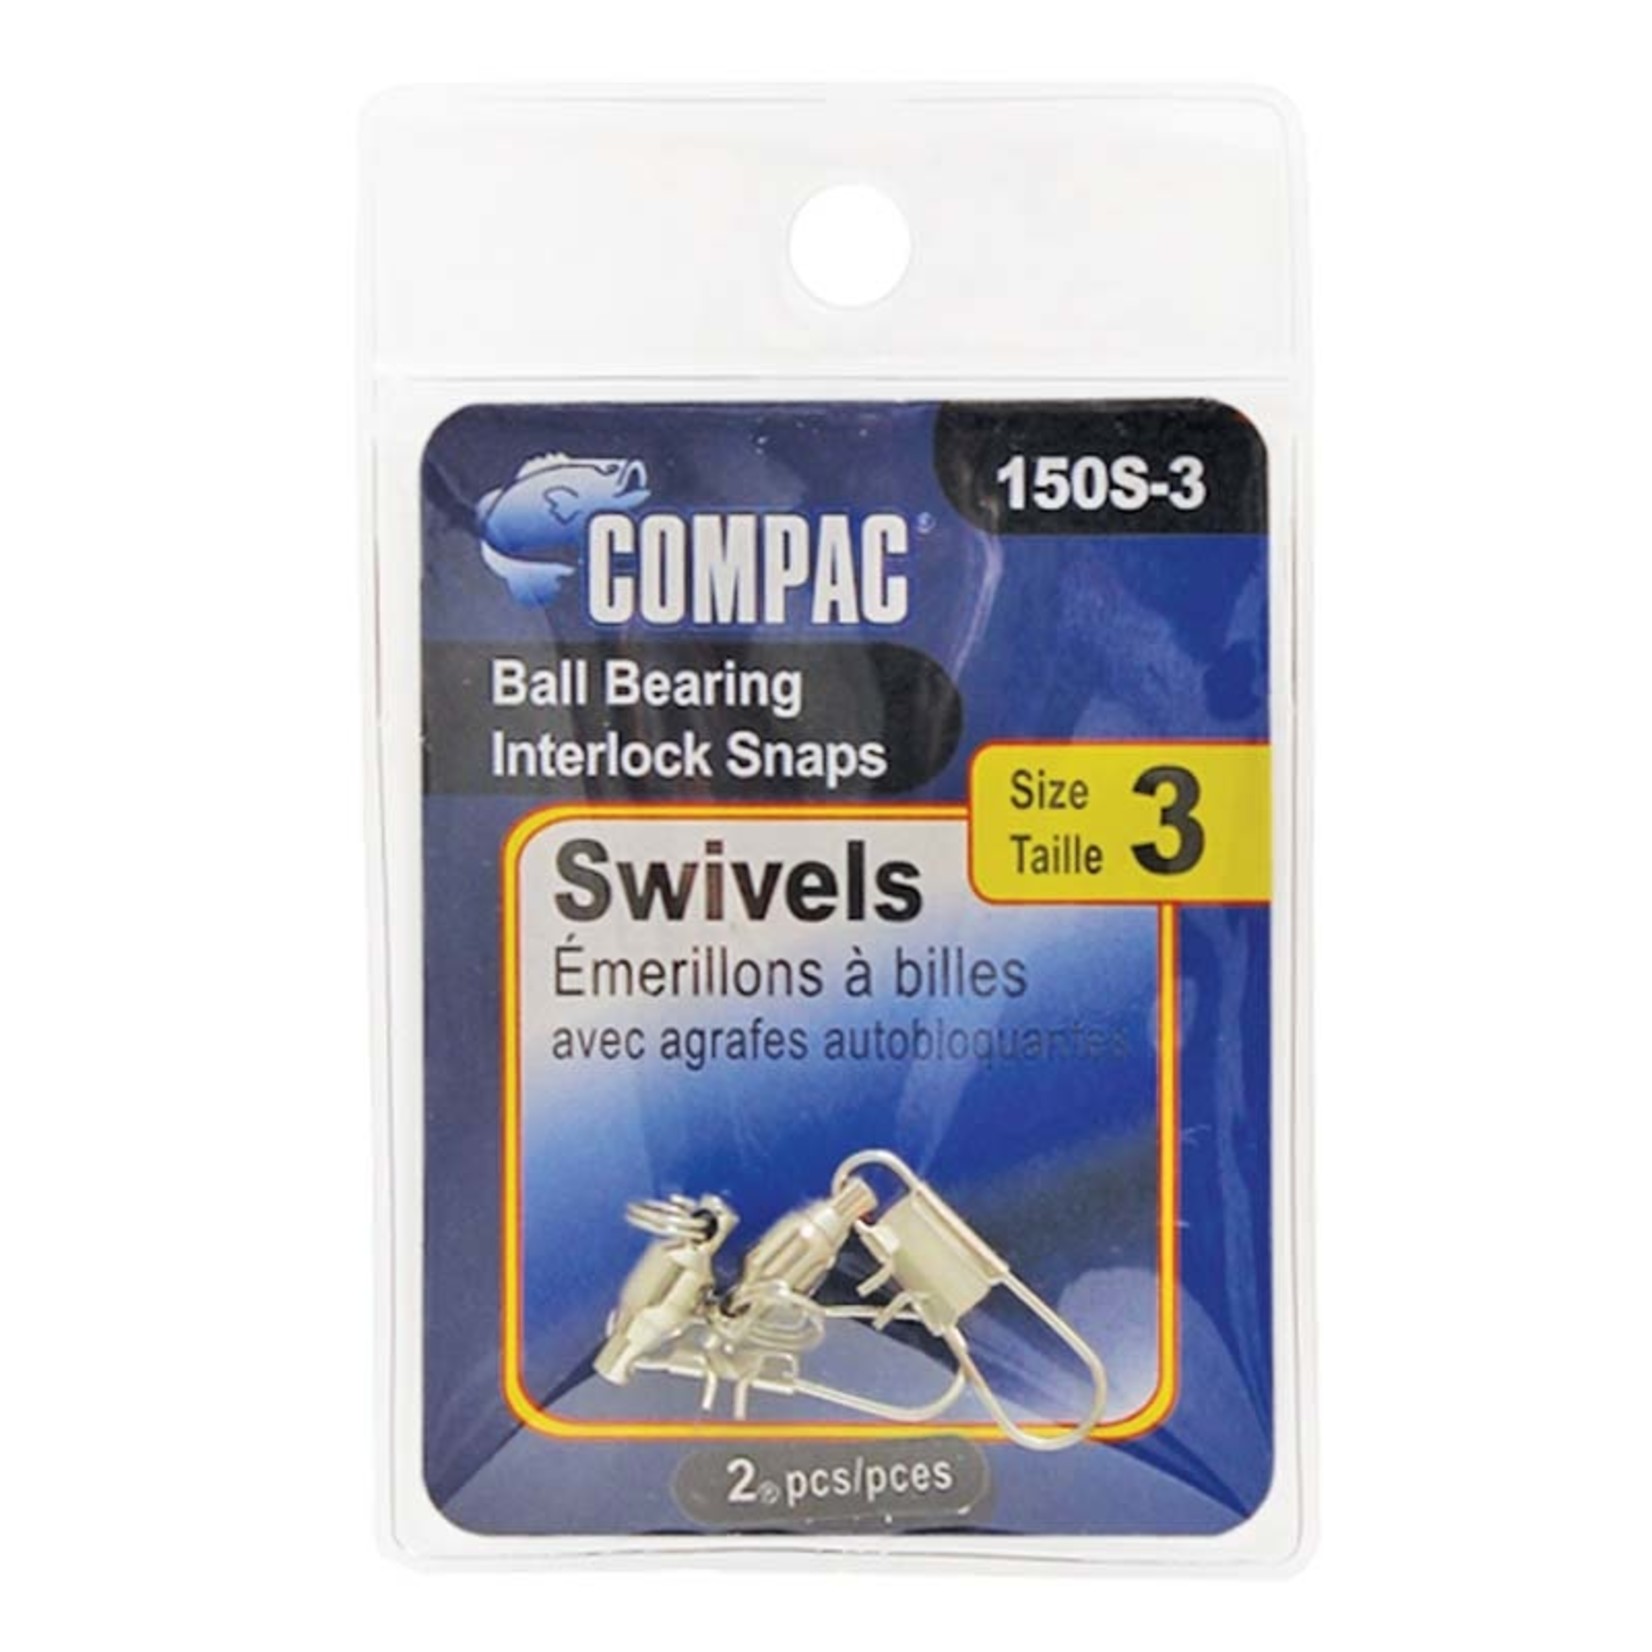 Compac Compac Econo Ball Bearing Swivels with Interlock Snaps